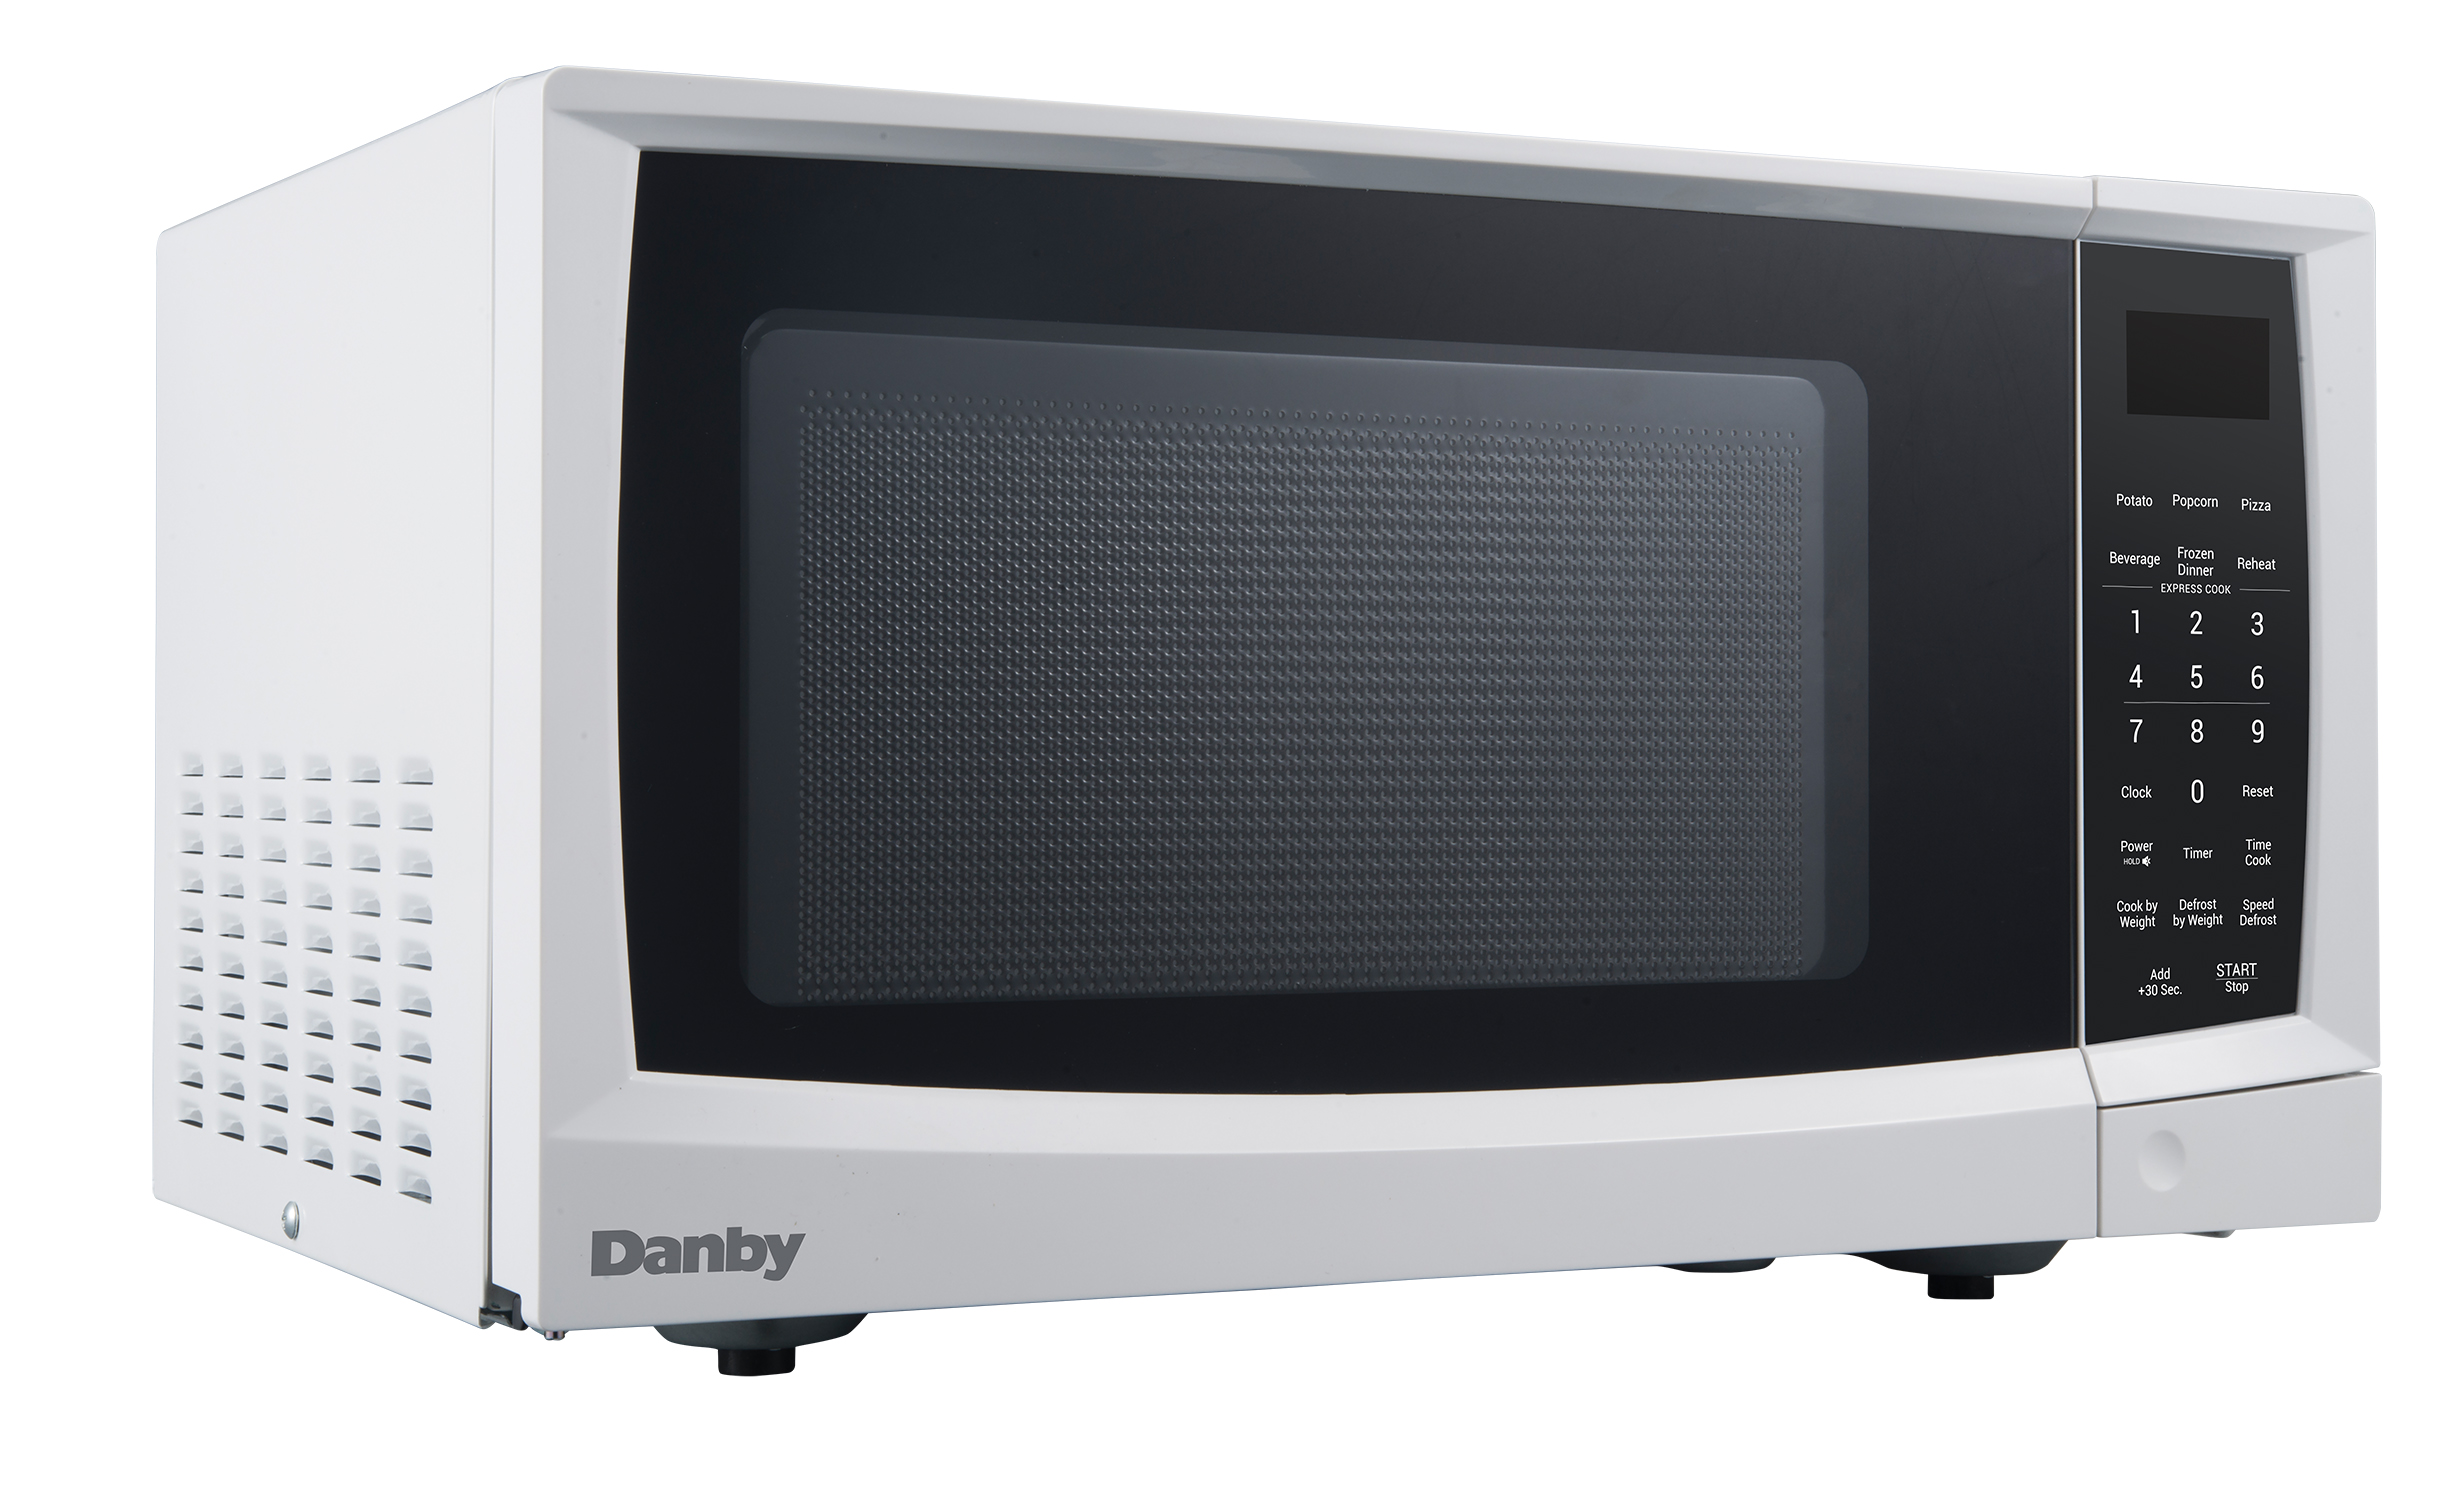 Danby 0.9 cu. ft. Microwave